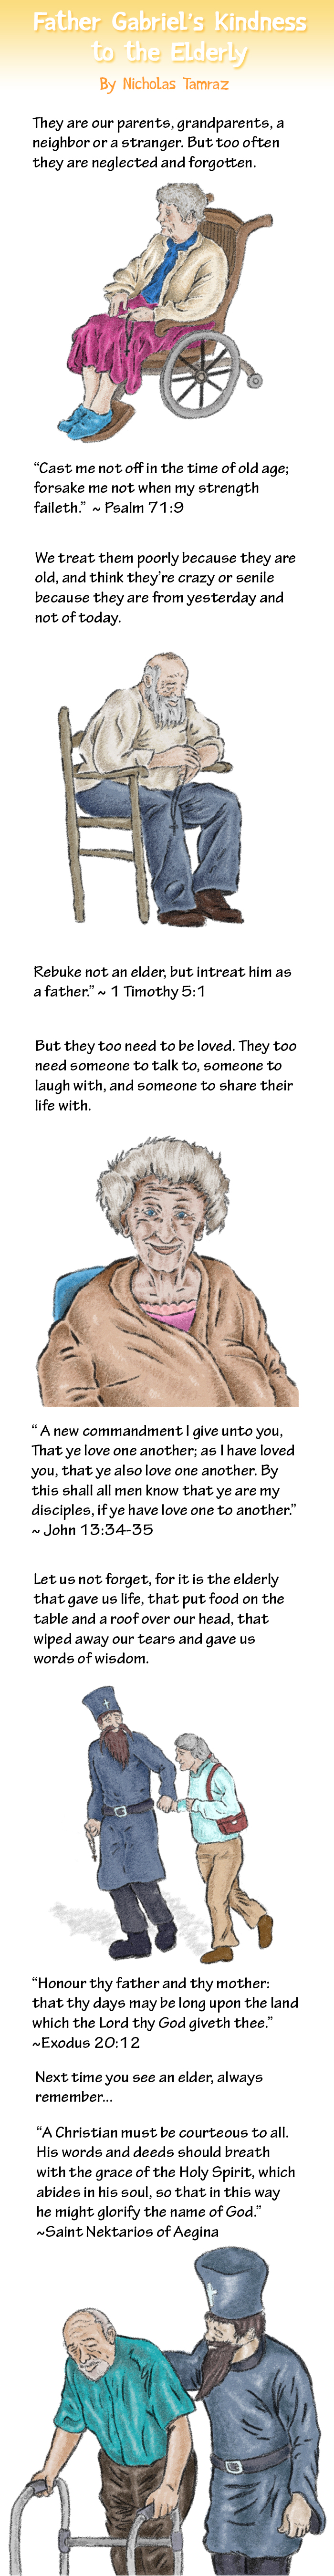 Father Gabriel’s Kindness to the Elderly Comic by Nicholas Tamraz